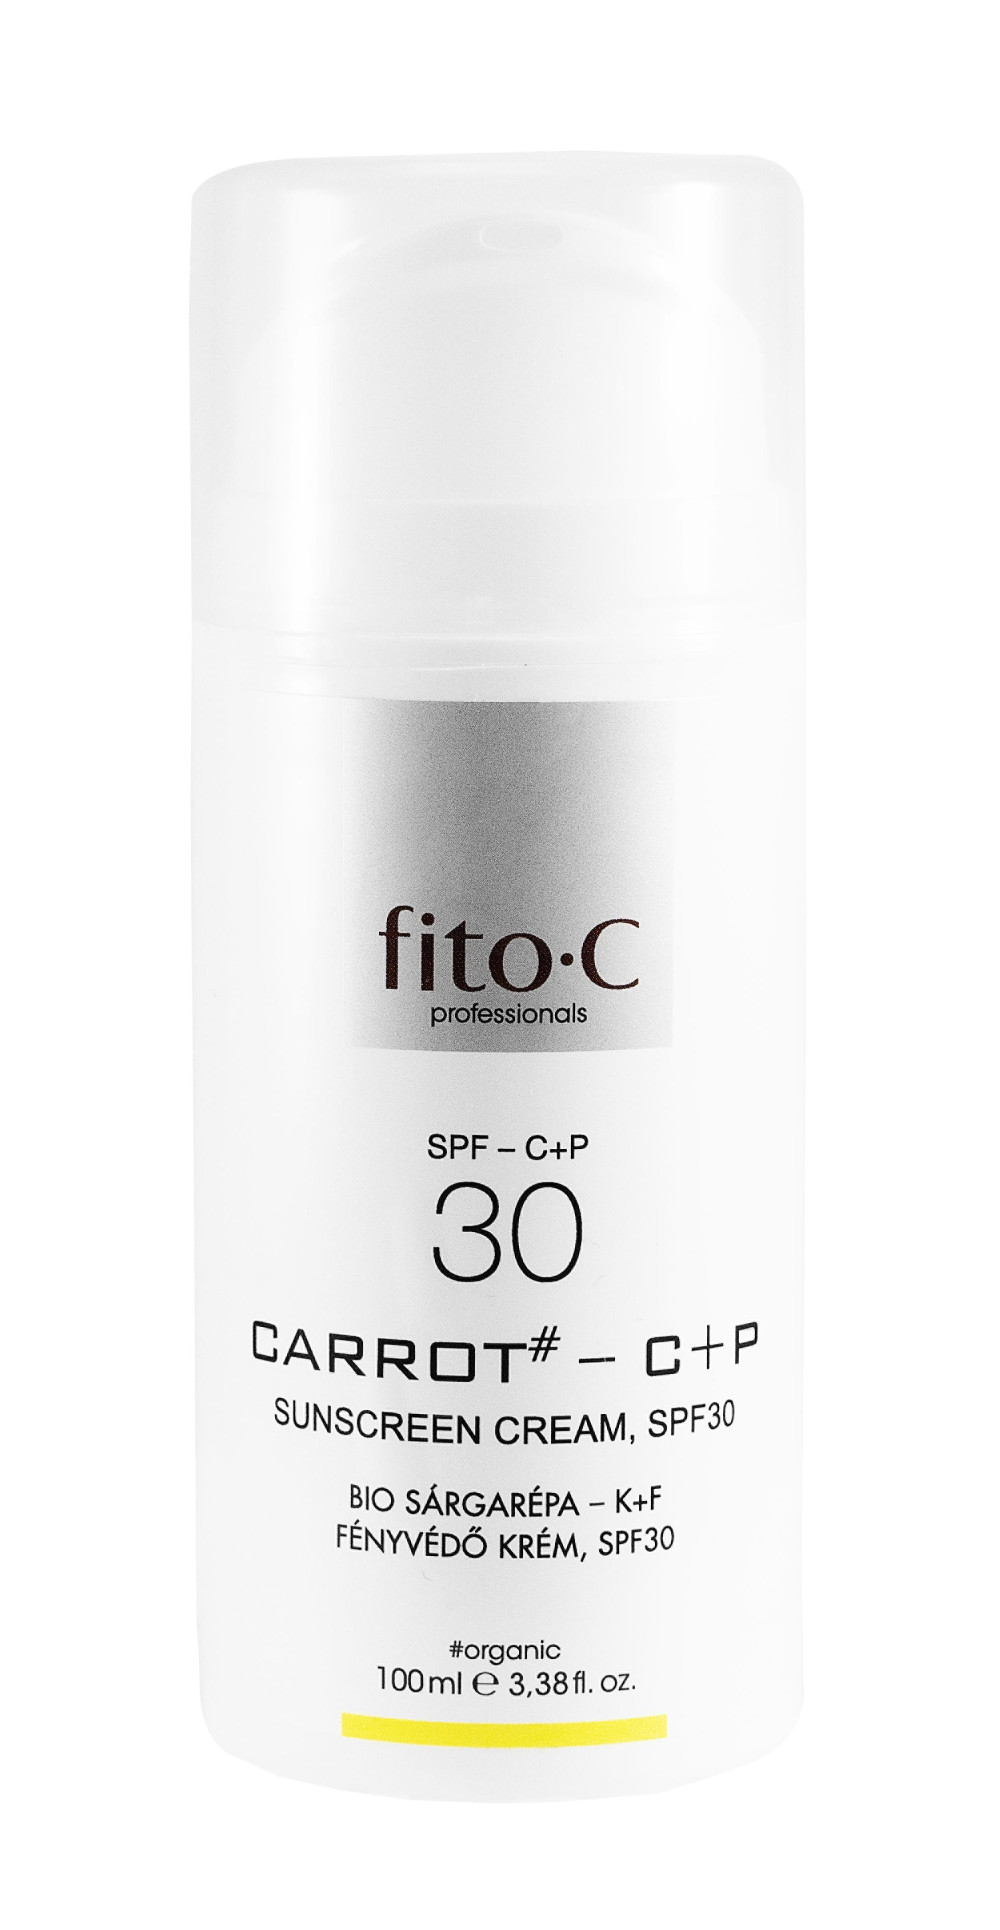 fito.C - Carrot - C+P Sunscreen Cream, SPF30 - Bio Sárgarépa - K+F Fényvédő Krém, SPF30, 100ml